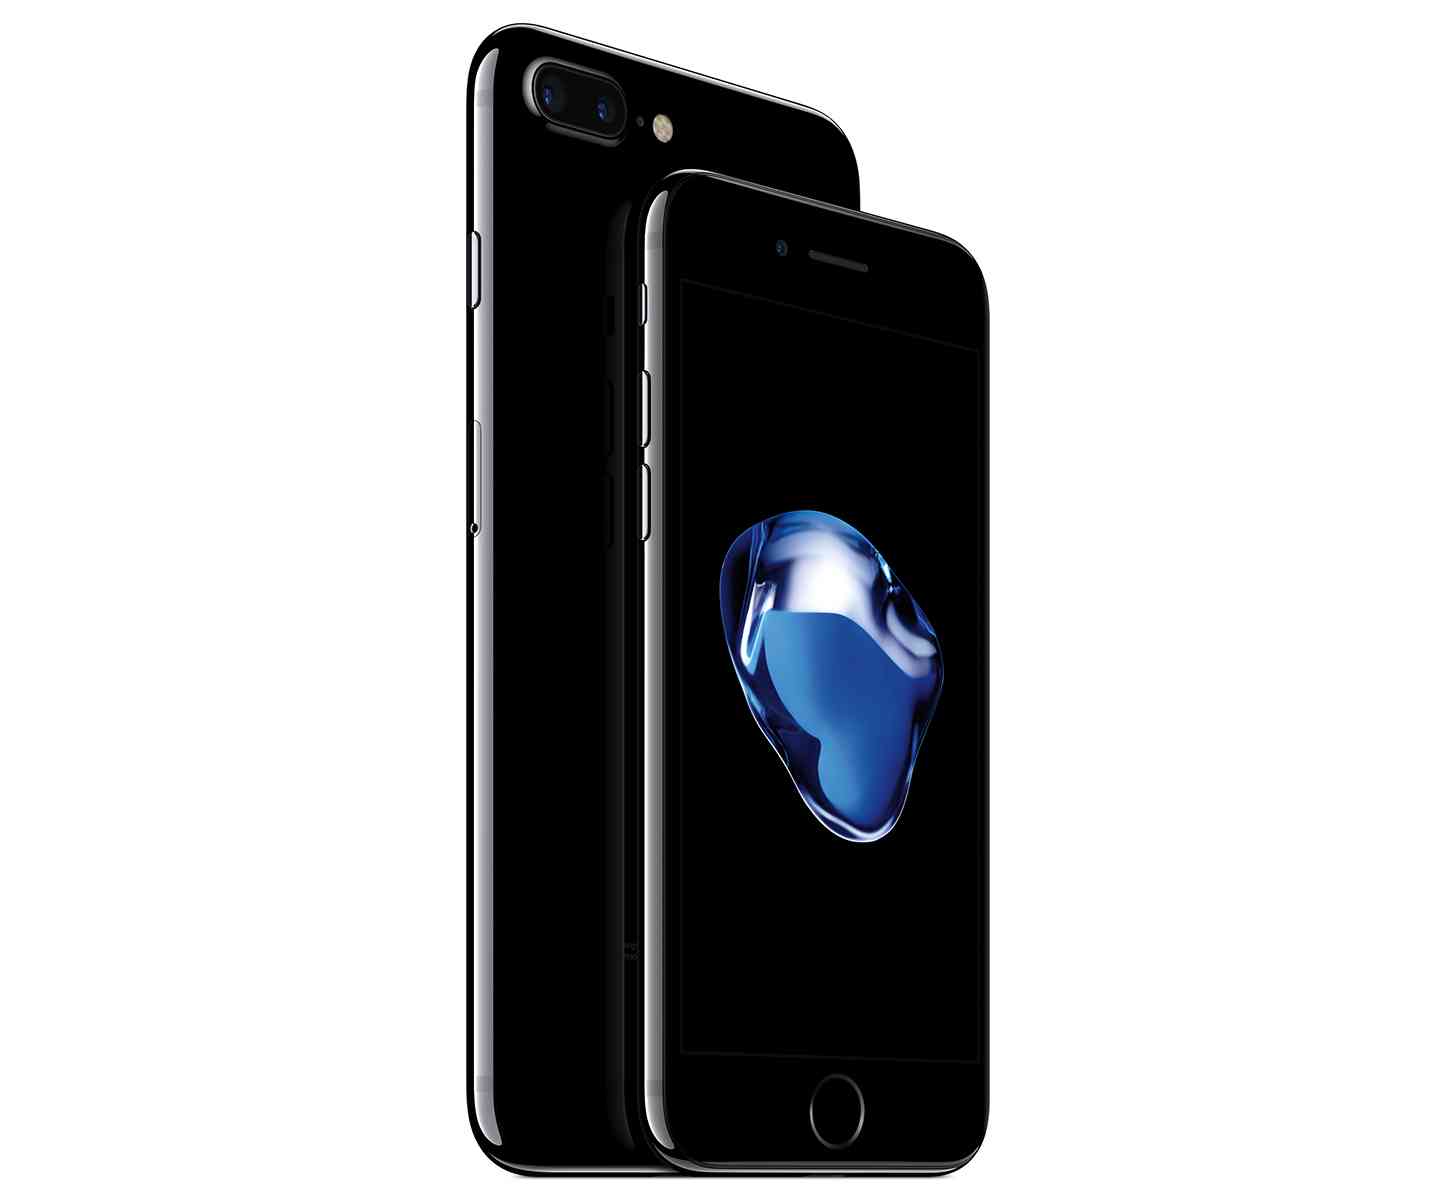 iPhone 7, iPhone 7 Plus Jet Black official